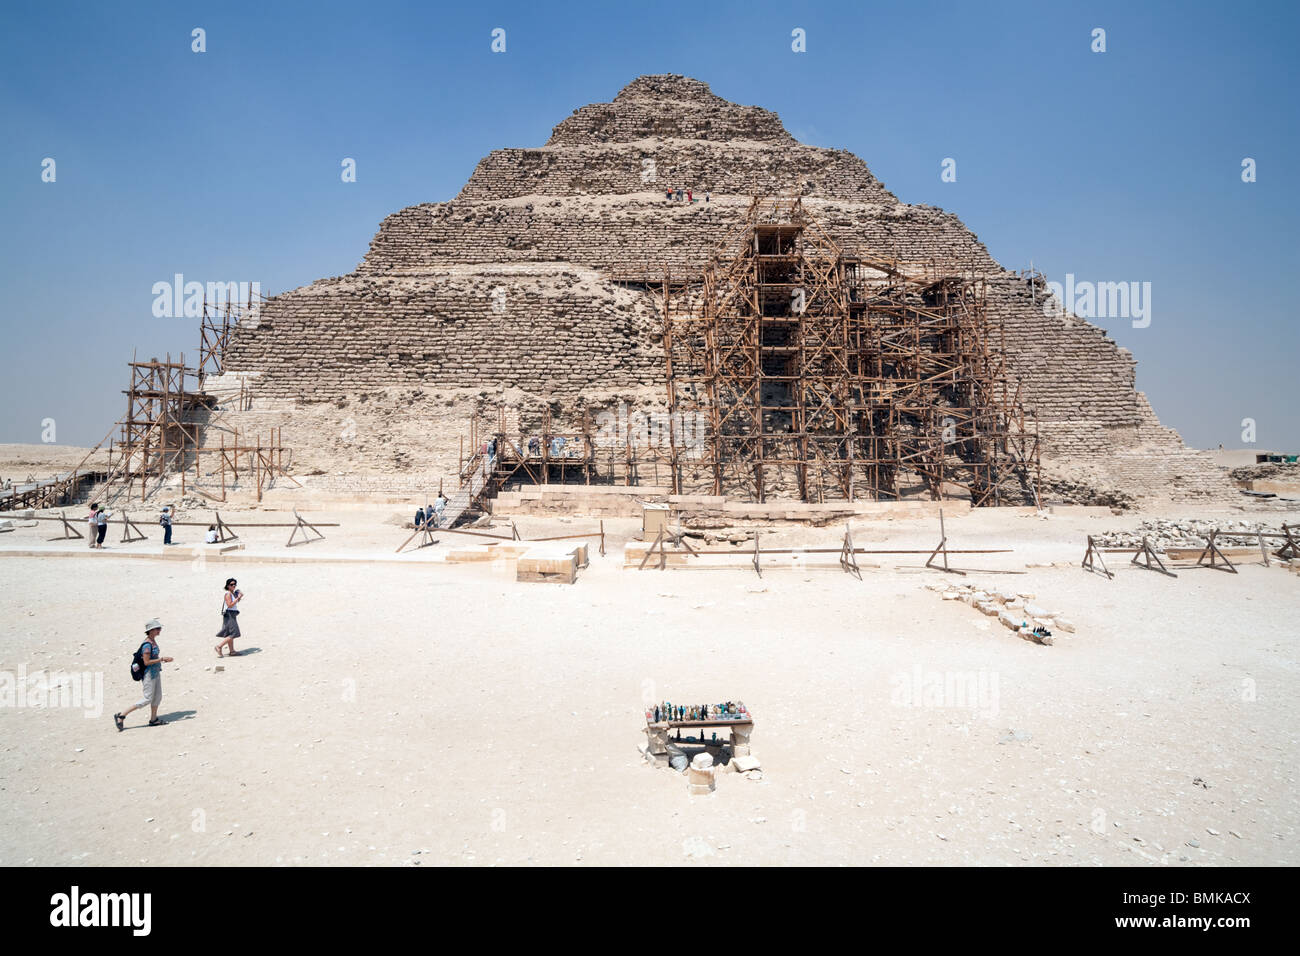 La pyramide de Djoser à saqqara, en Egypte, en faisant l'objet de travaux de restauration Banque D'Images